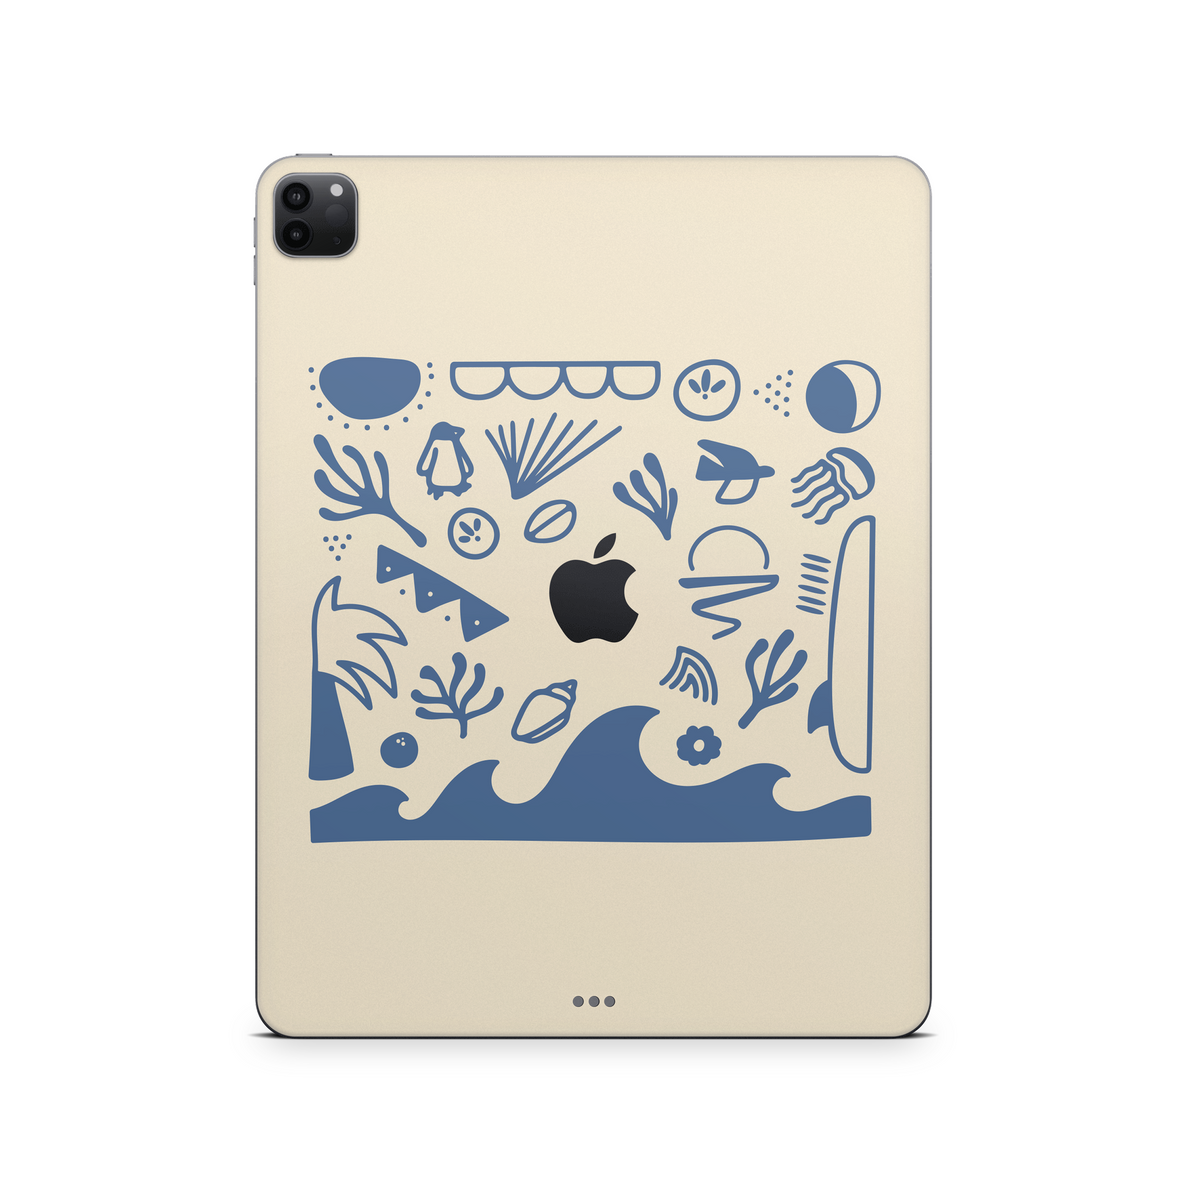 Surfs Up (iPad Skin)